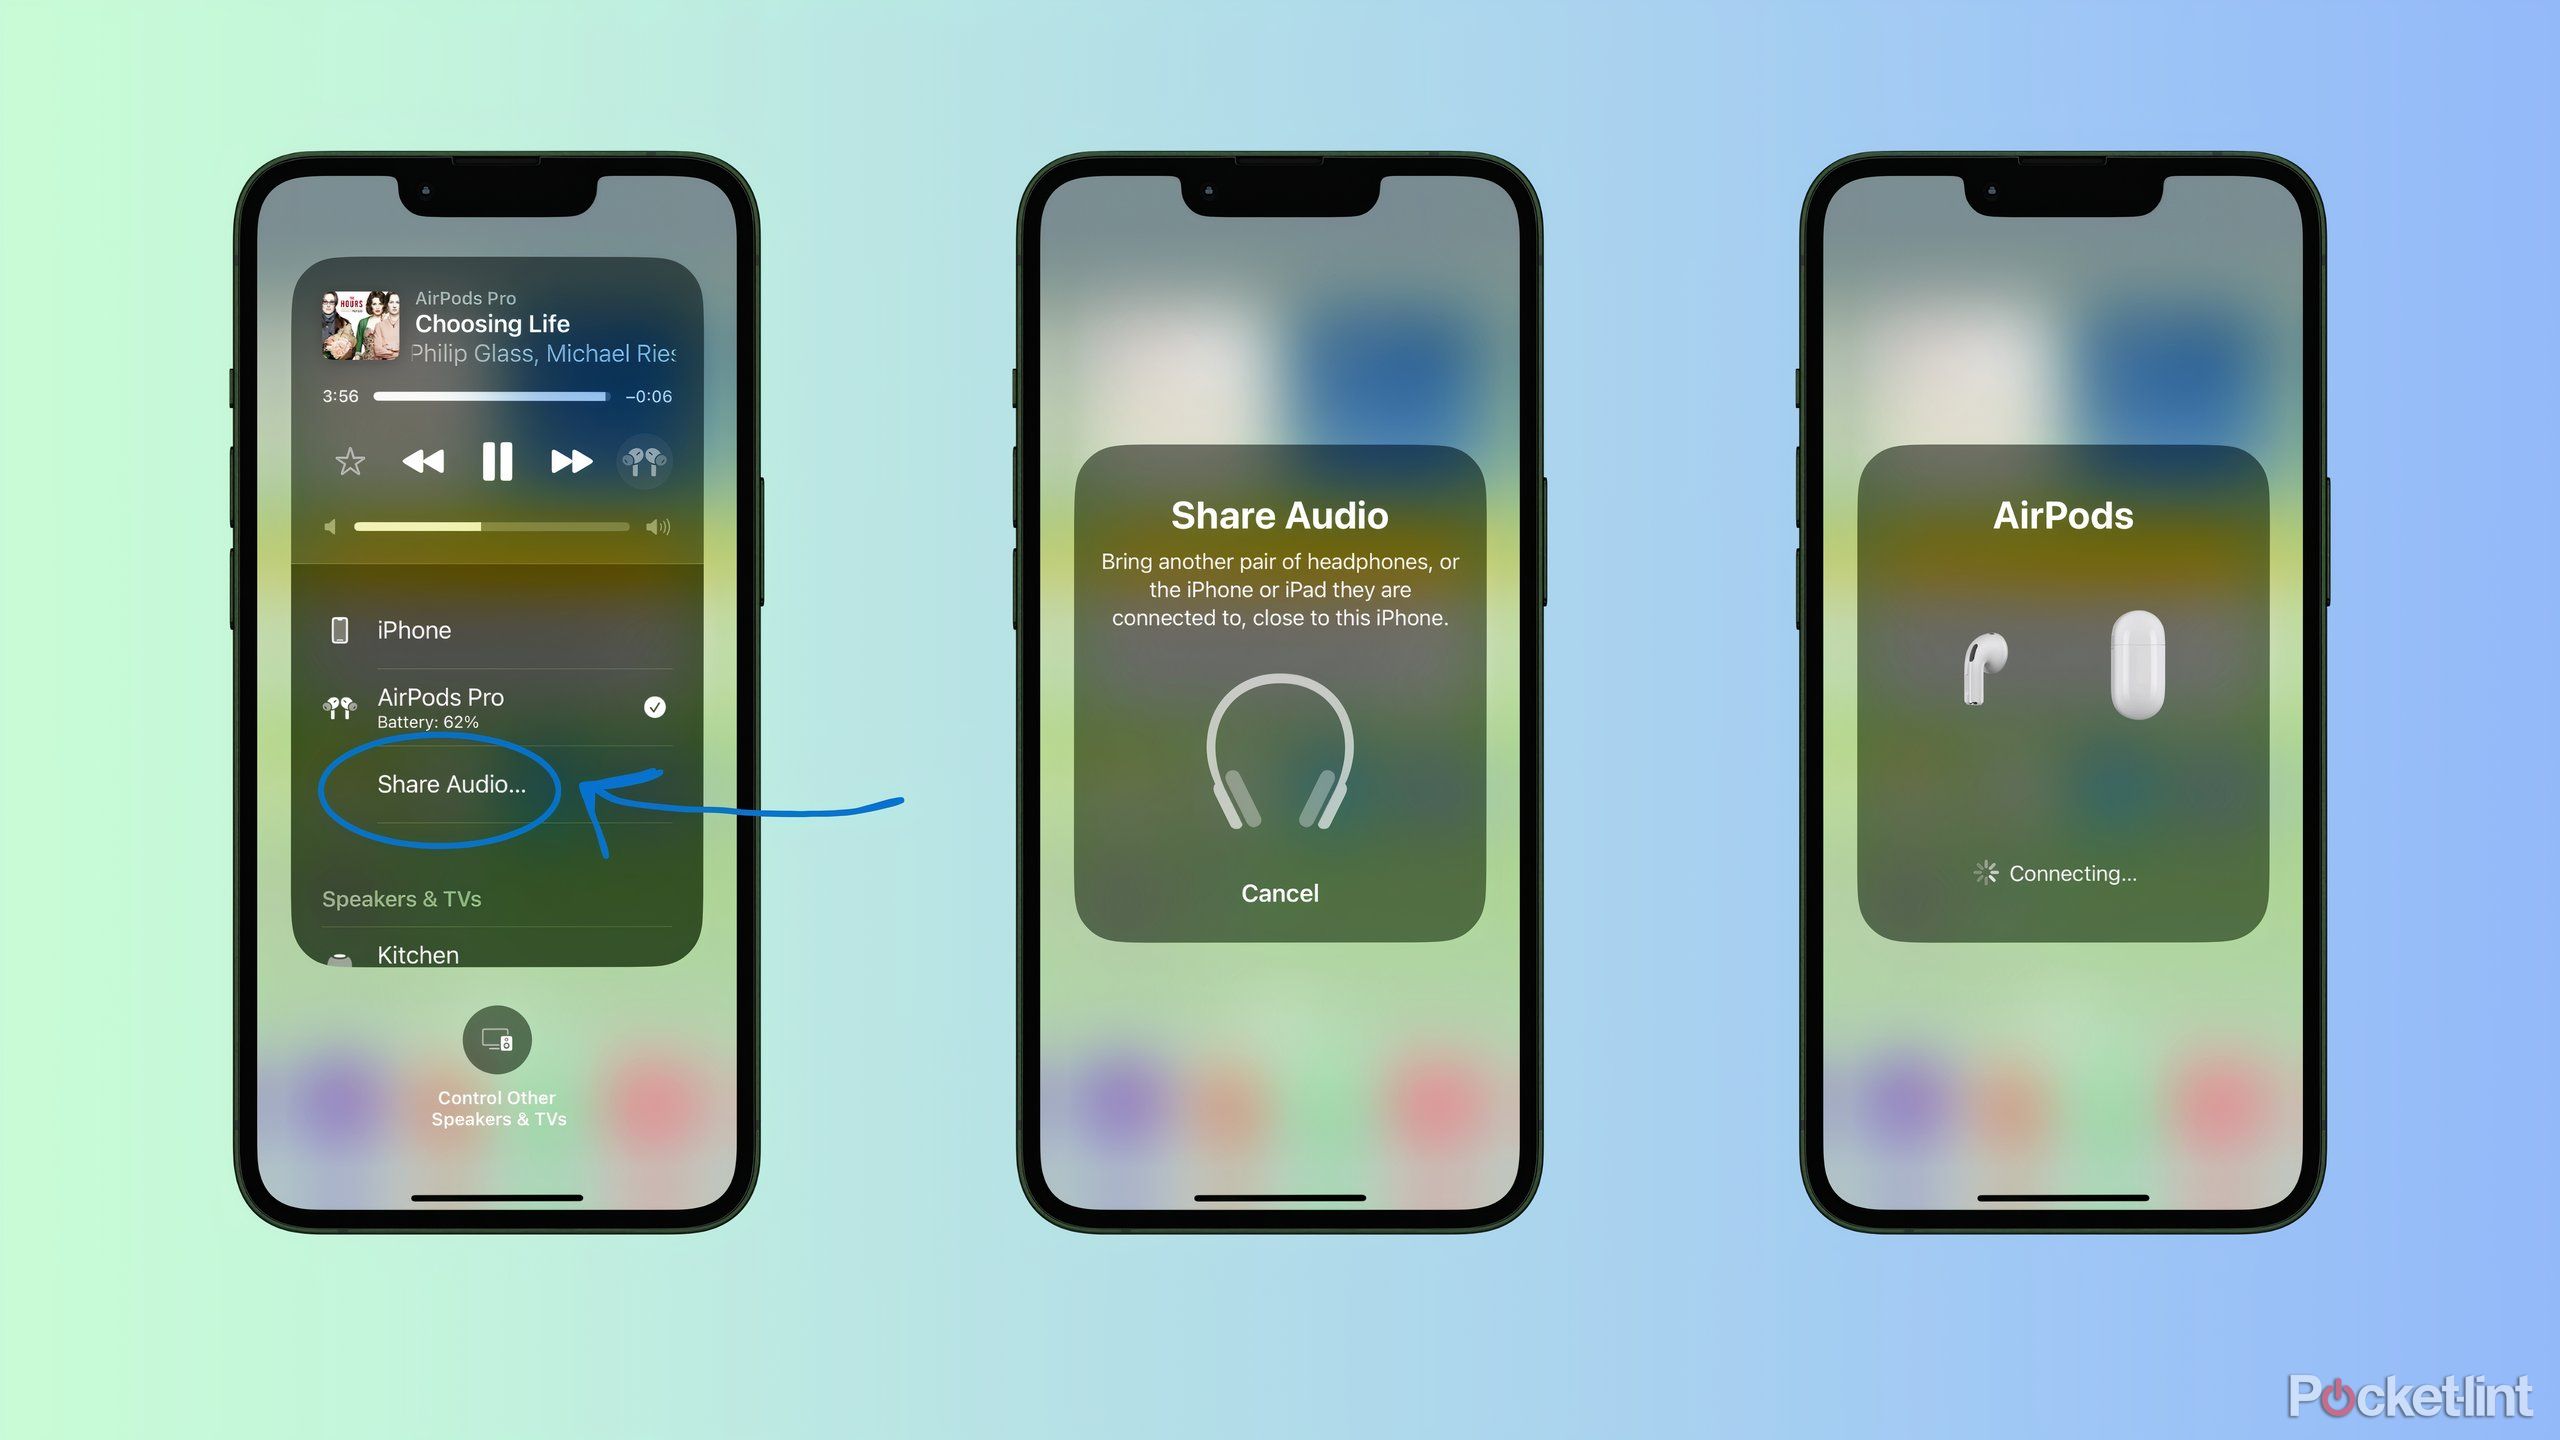 Screenshots showing the Share Audio screen in iOS.